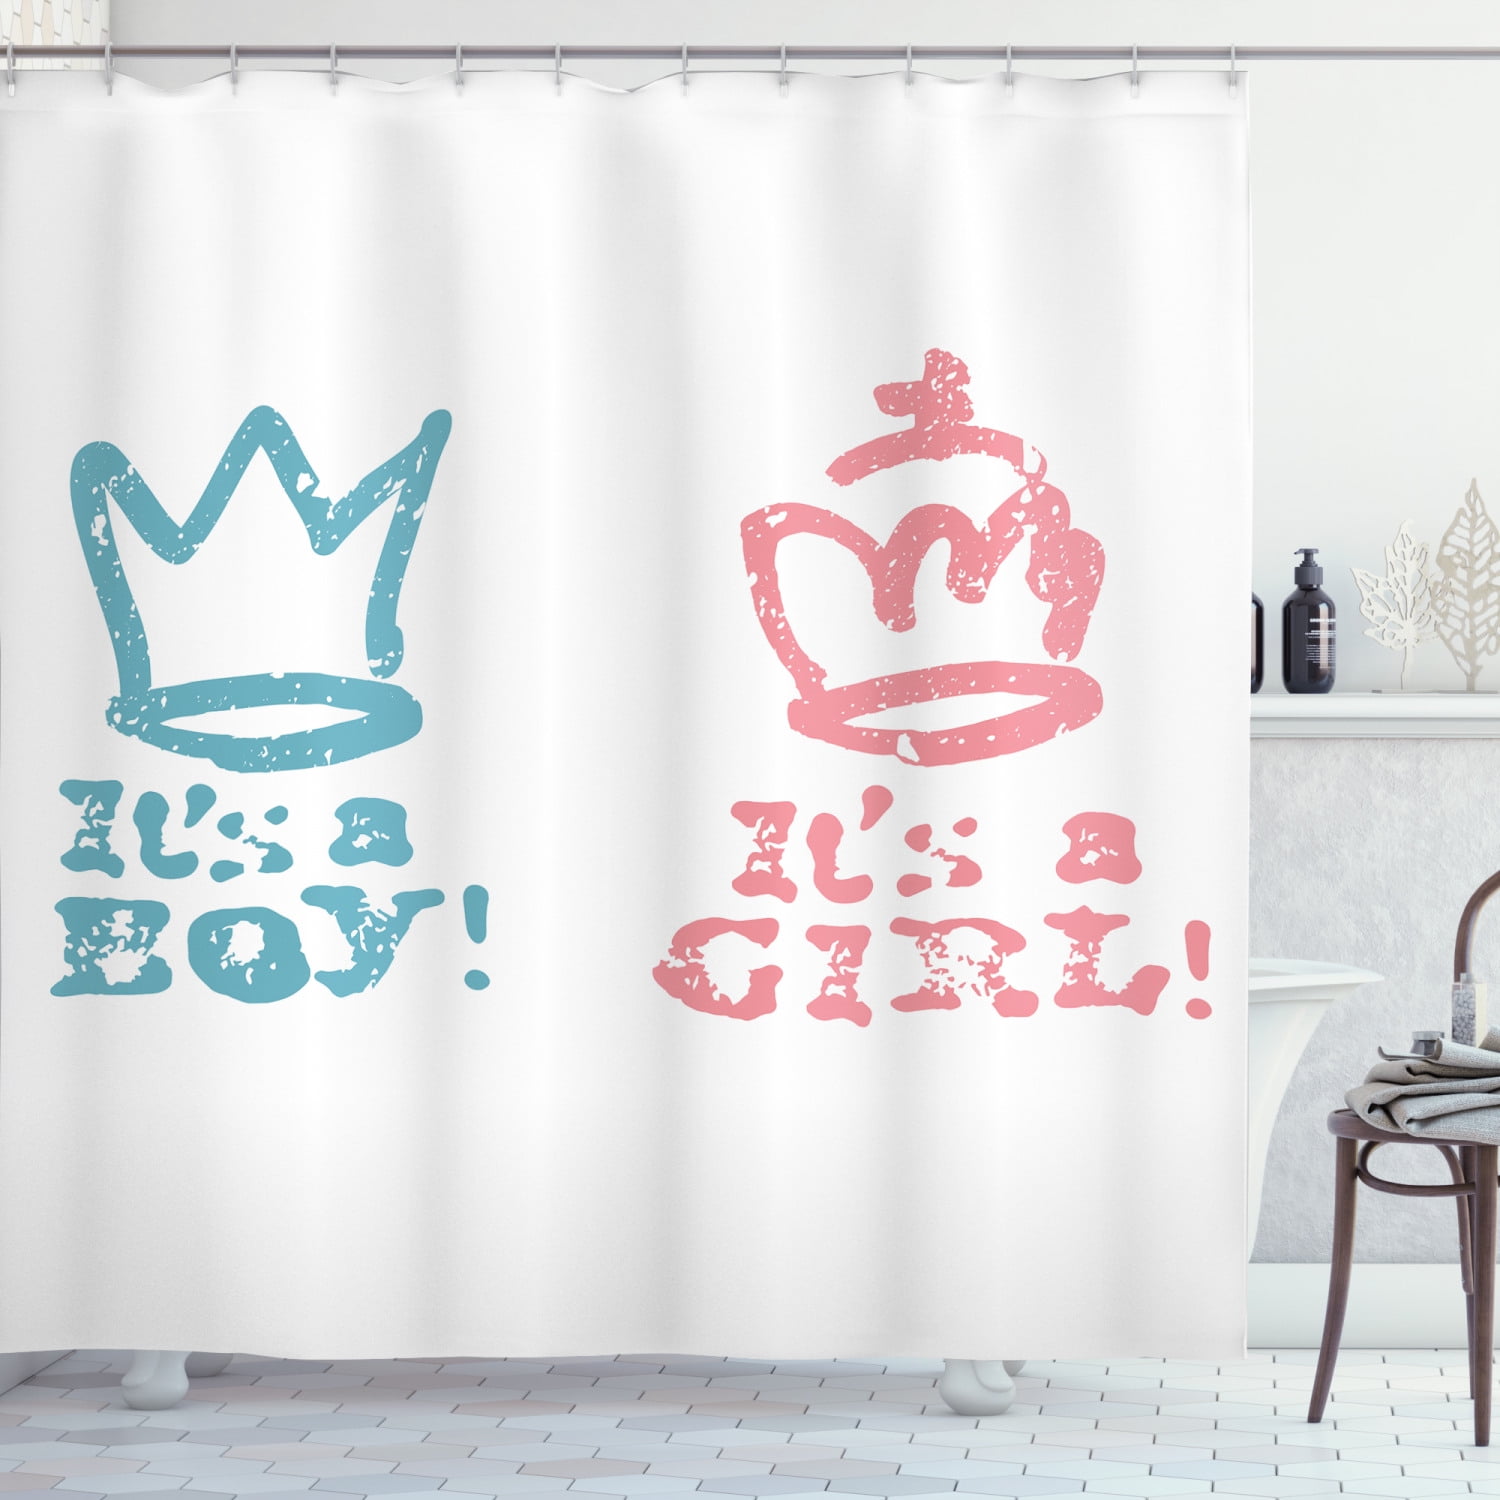 Magical castle Bathroom Shower Curtain Waterproof Fabric w/12 Hooks 71*71in HOT 